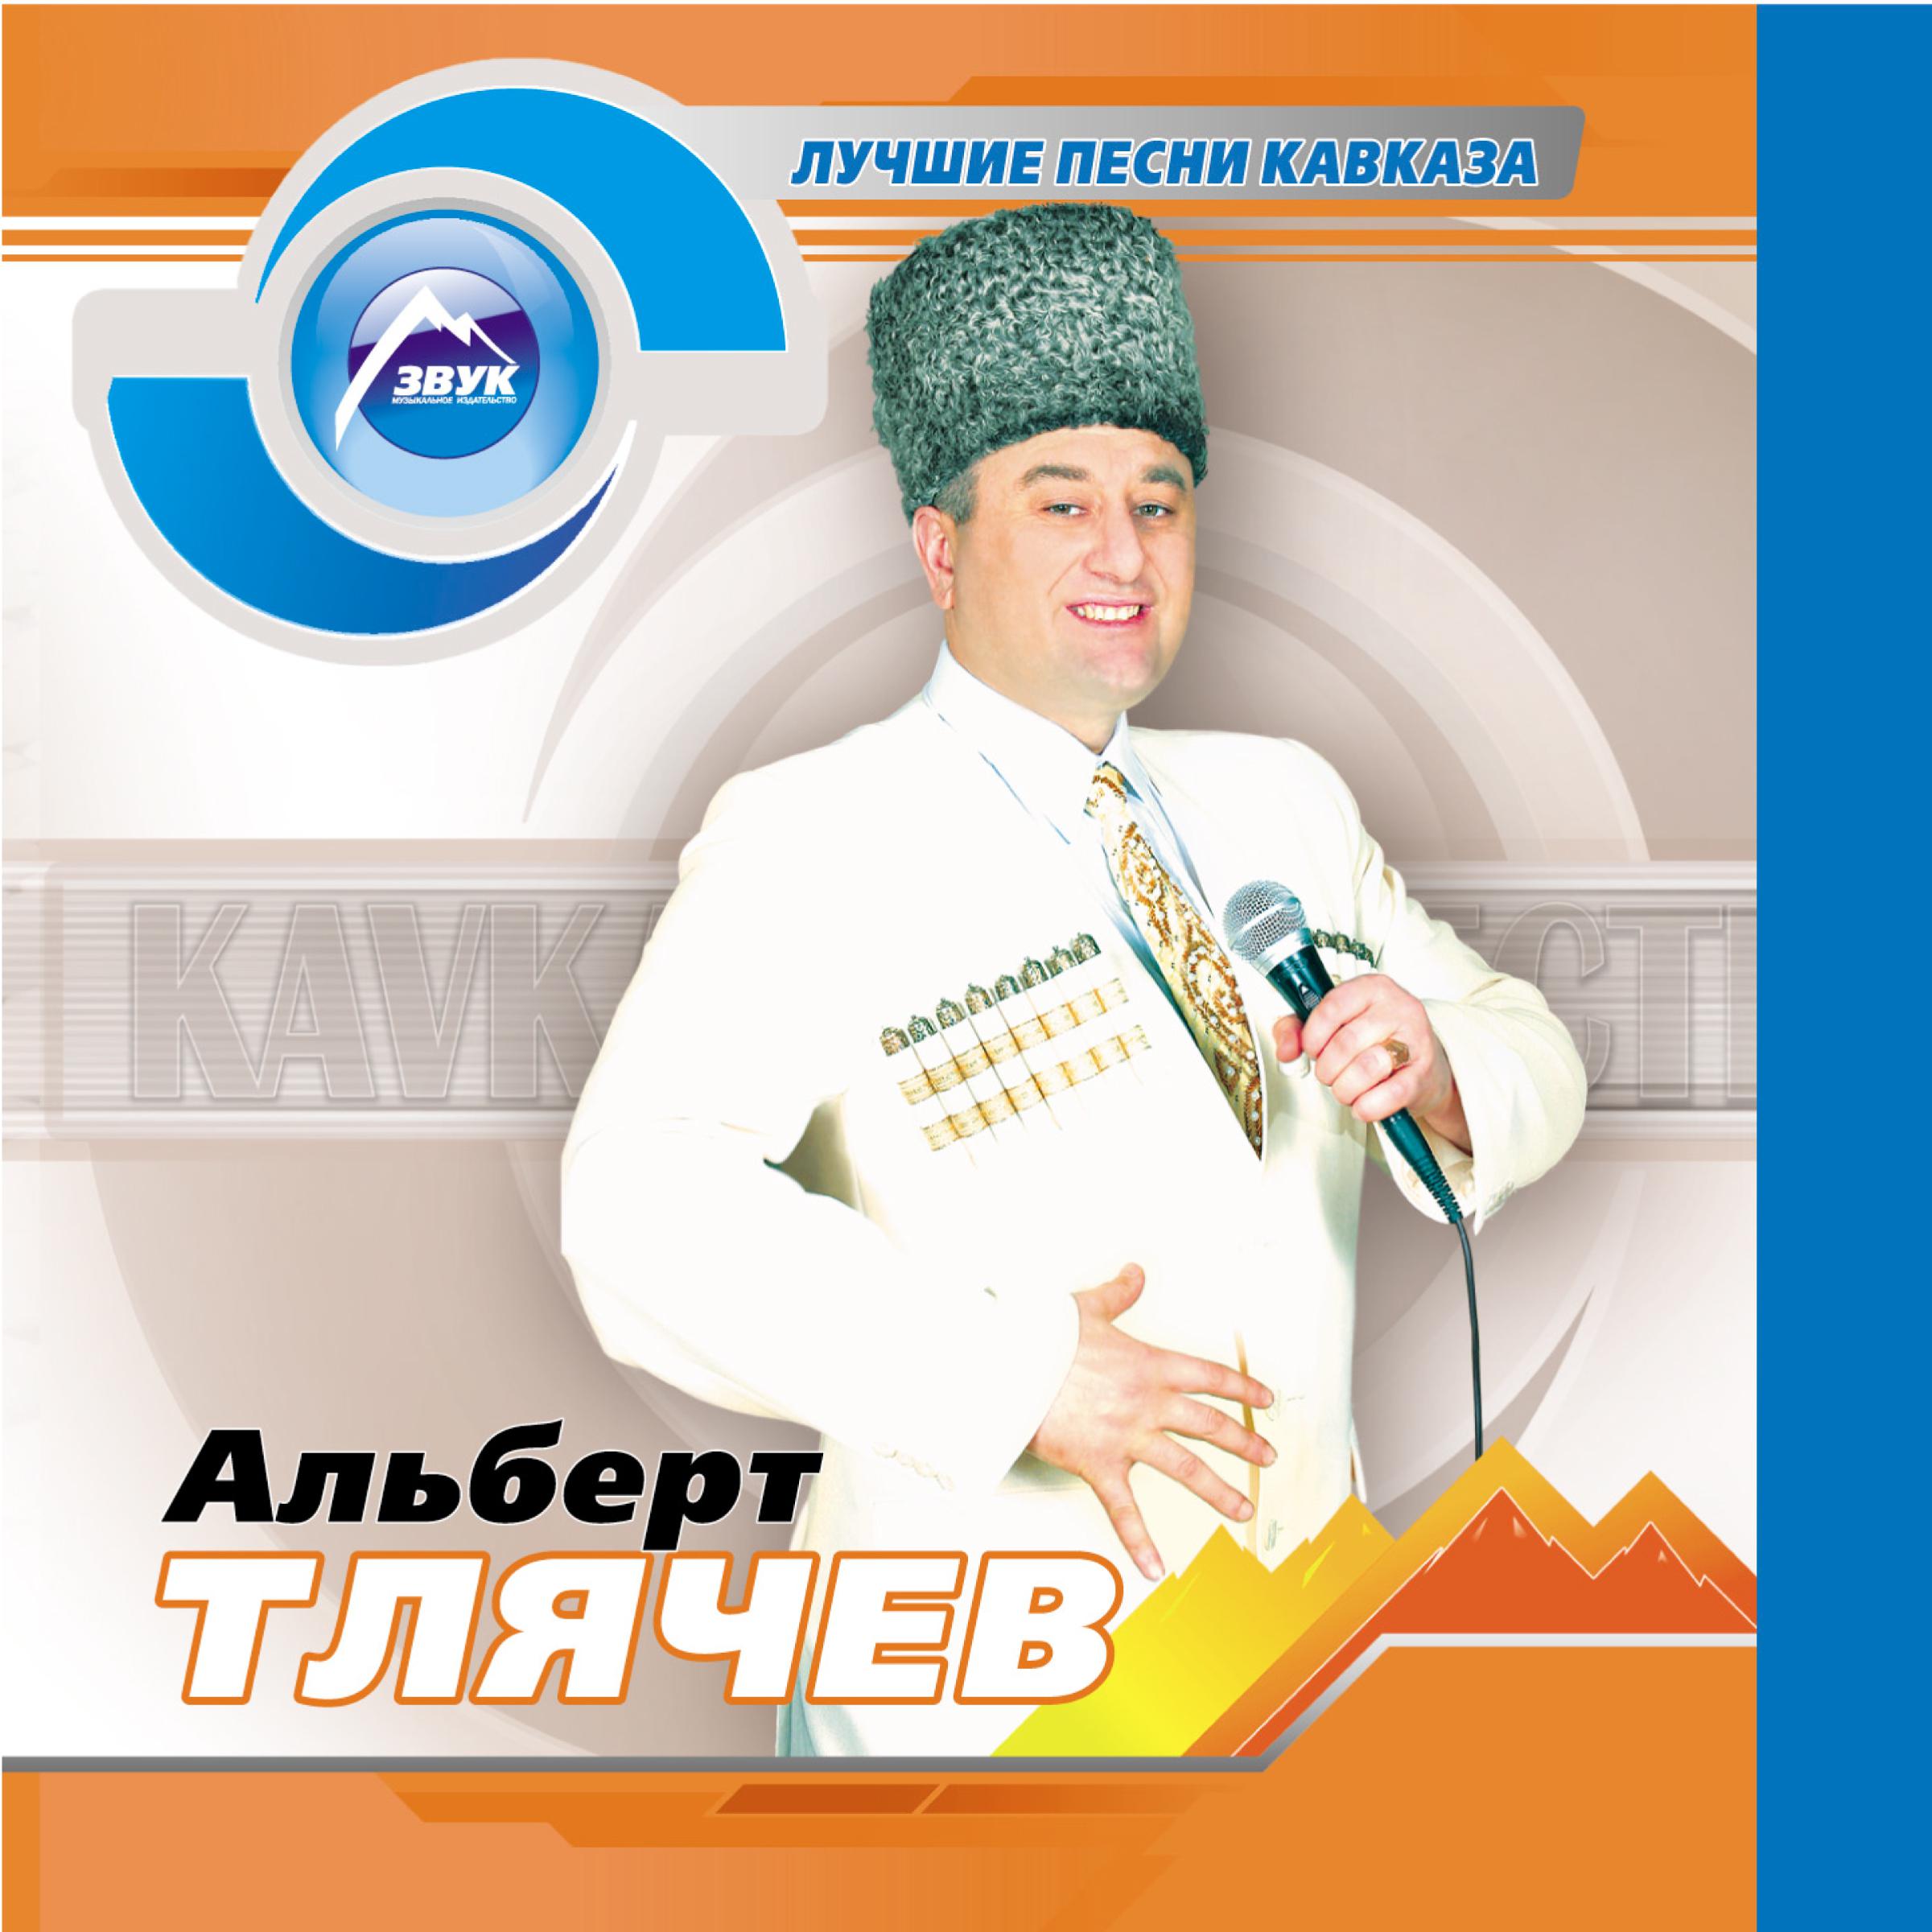 Слушать кавказская музыку популярные